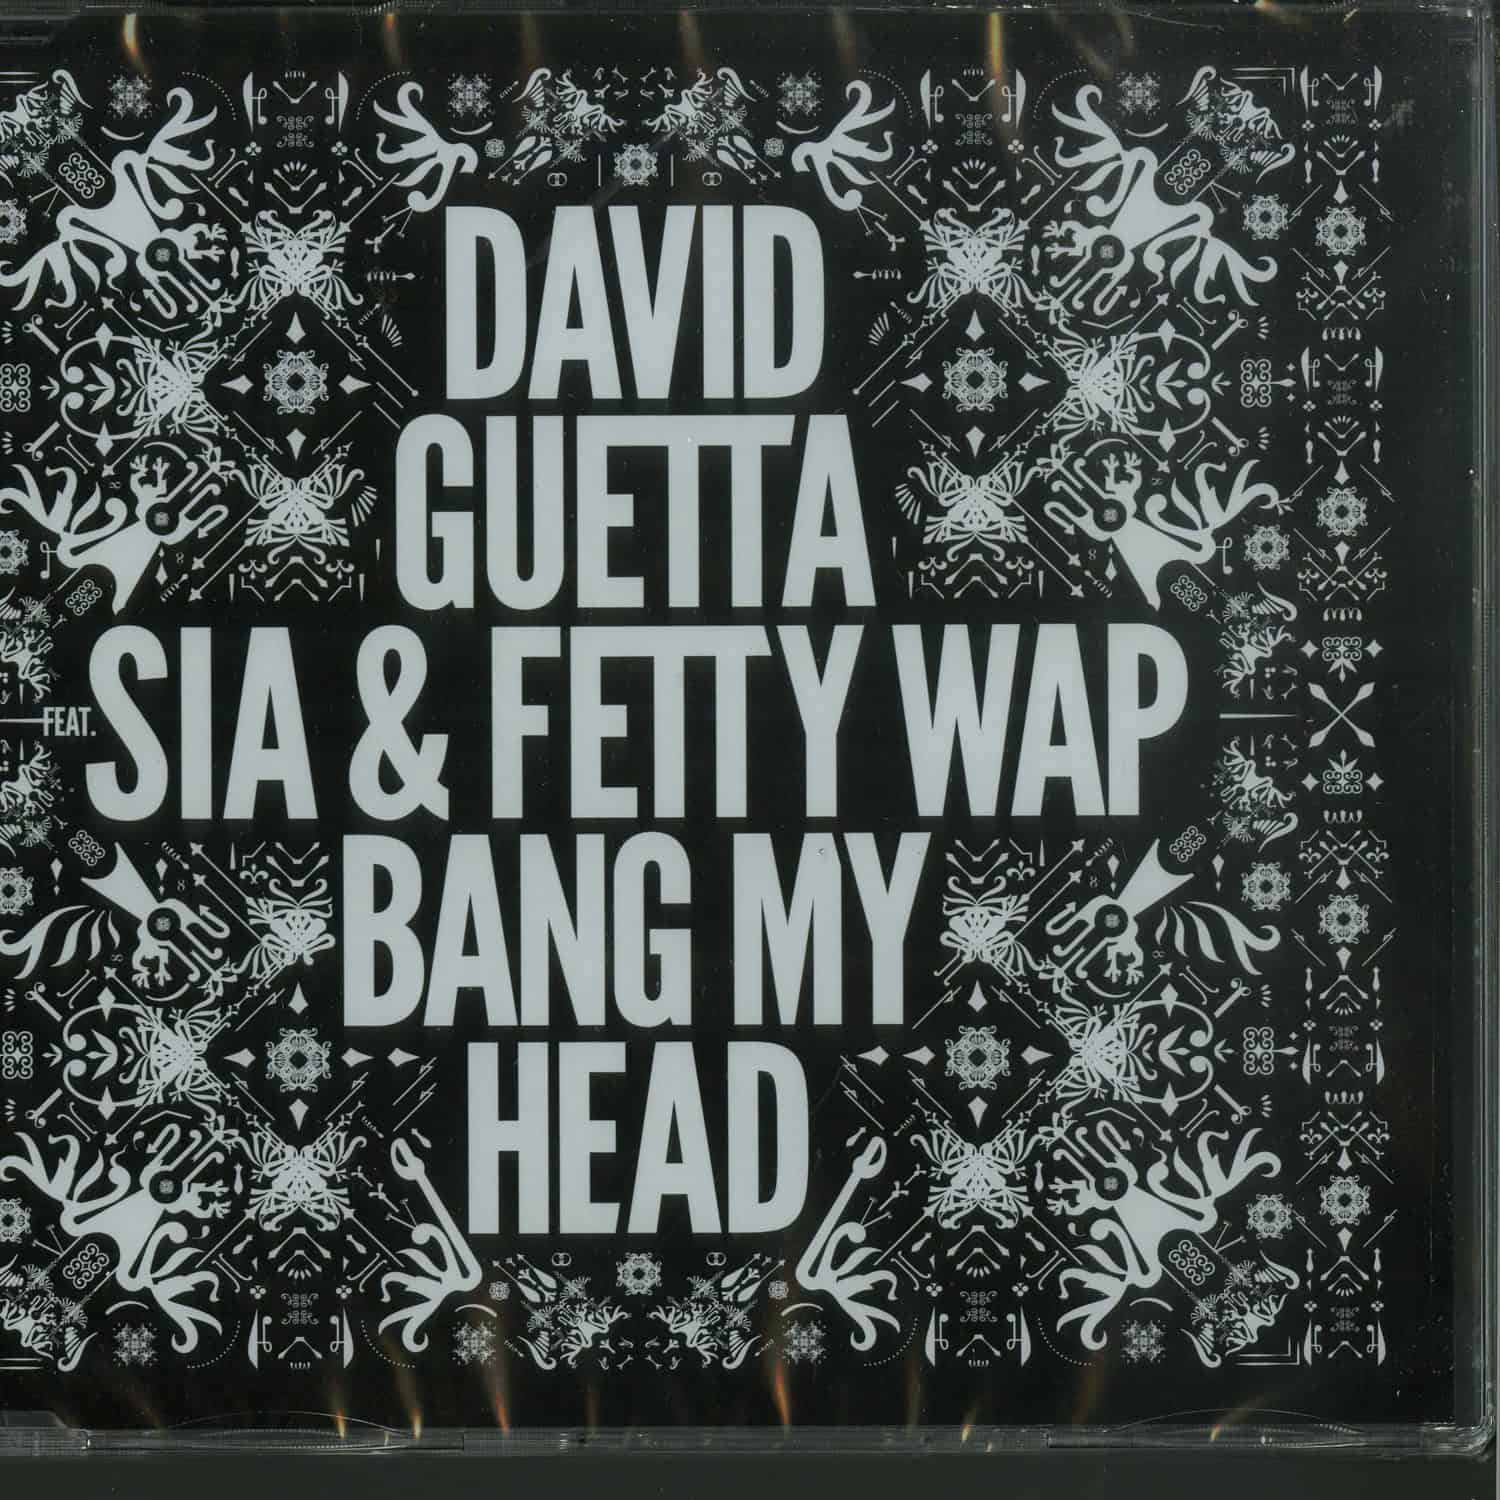 David Guetta , Sia & Fetty Wap - BANG MY HEAD 